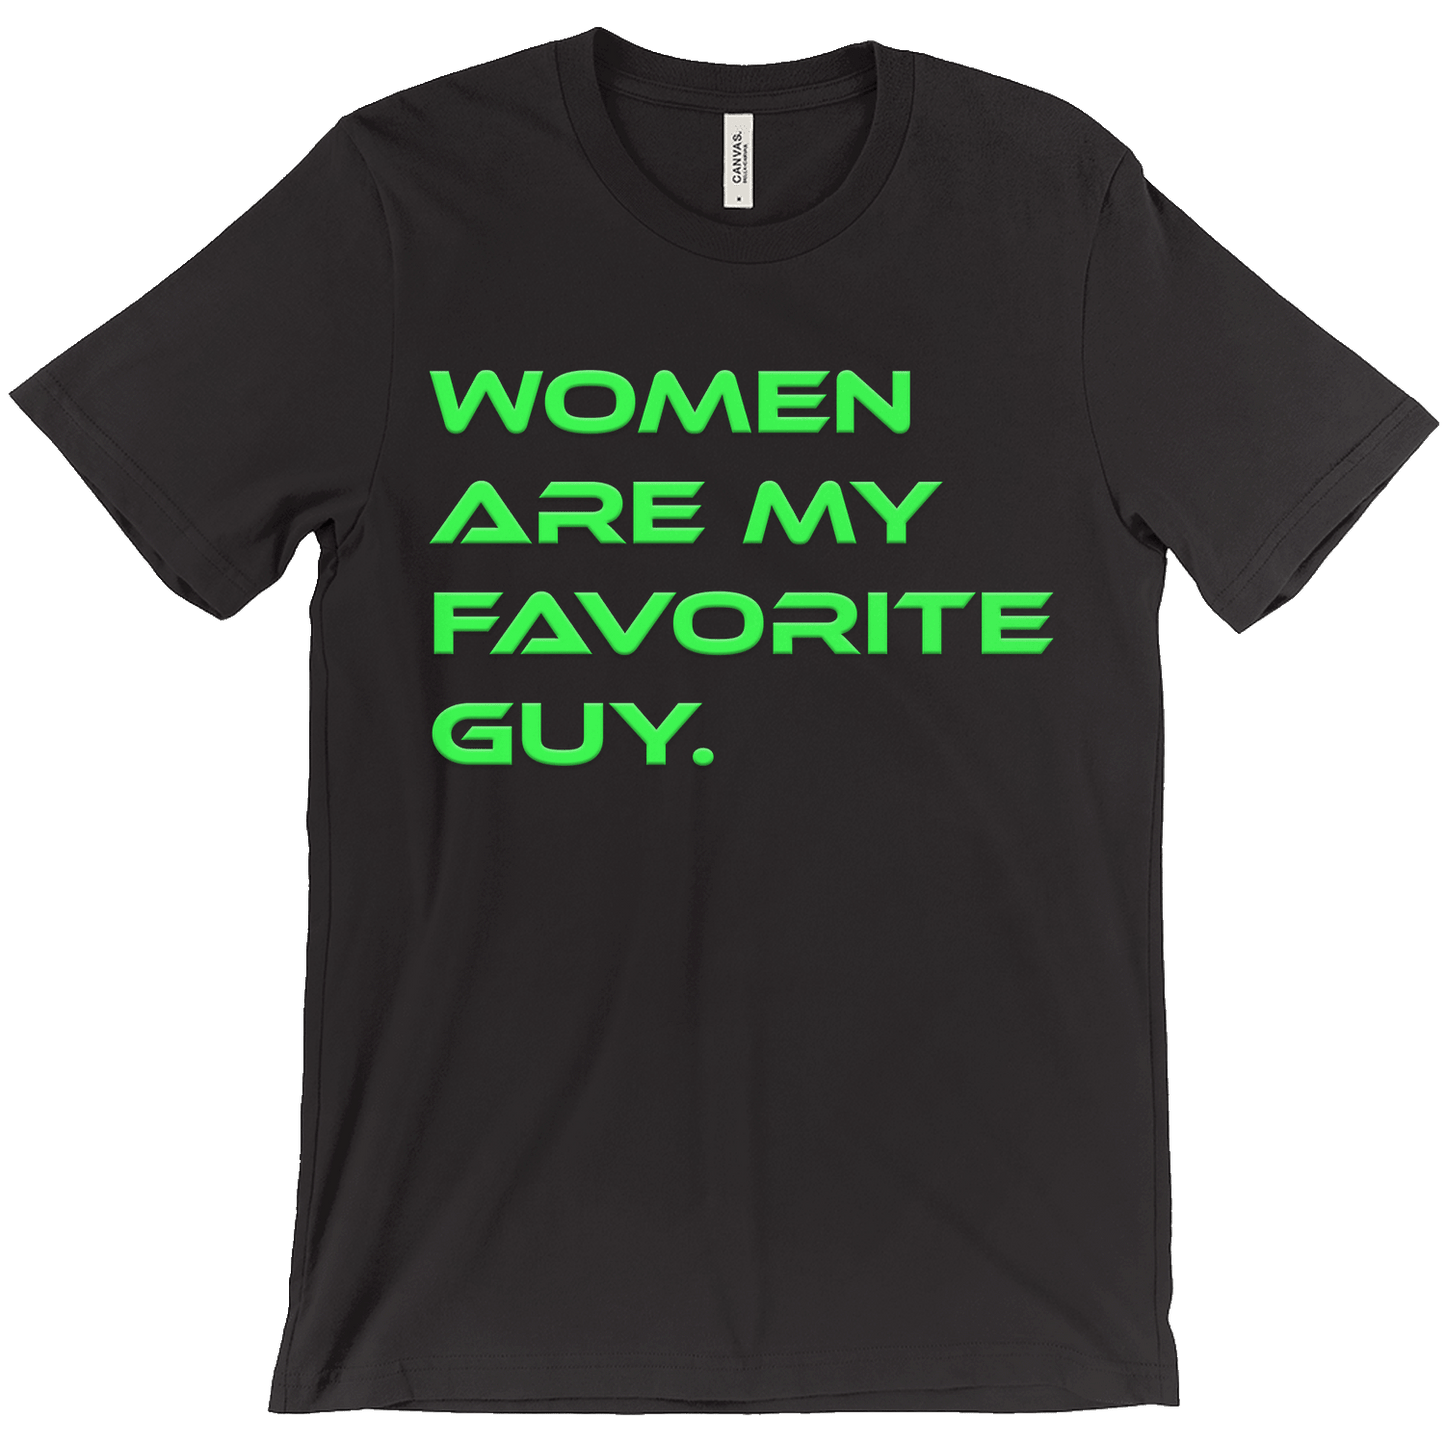 WOMEN ARE MY FAVORITE GUY – T-SHIRT